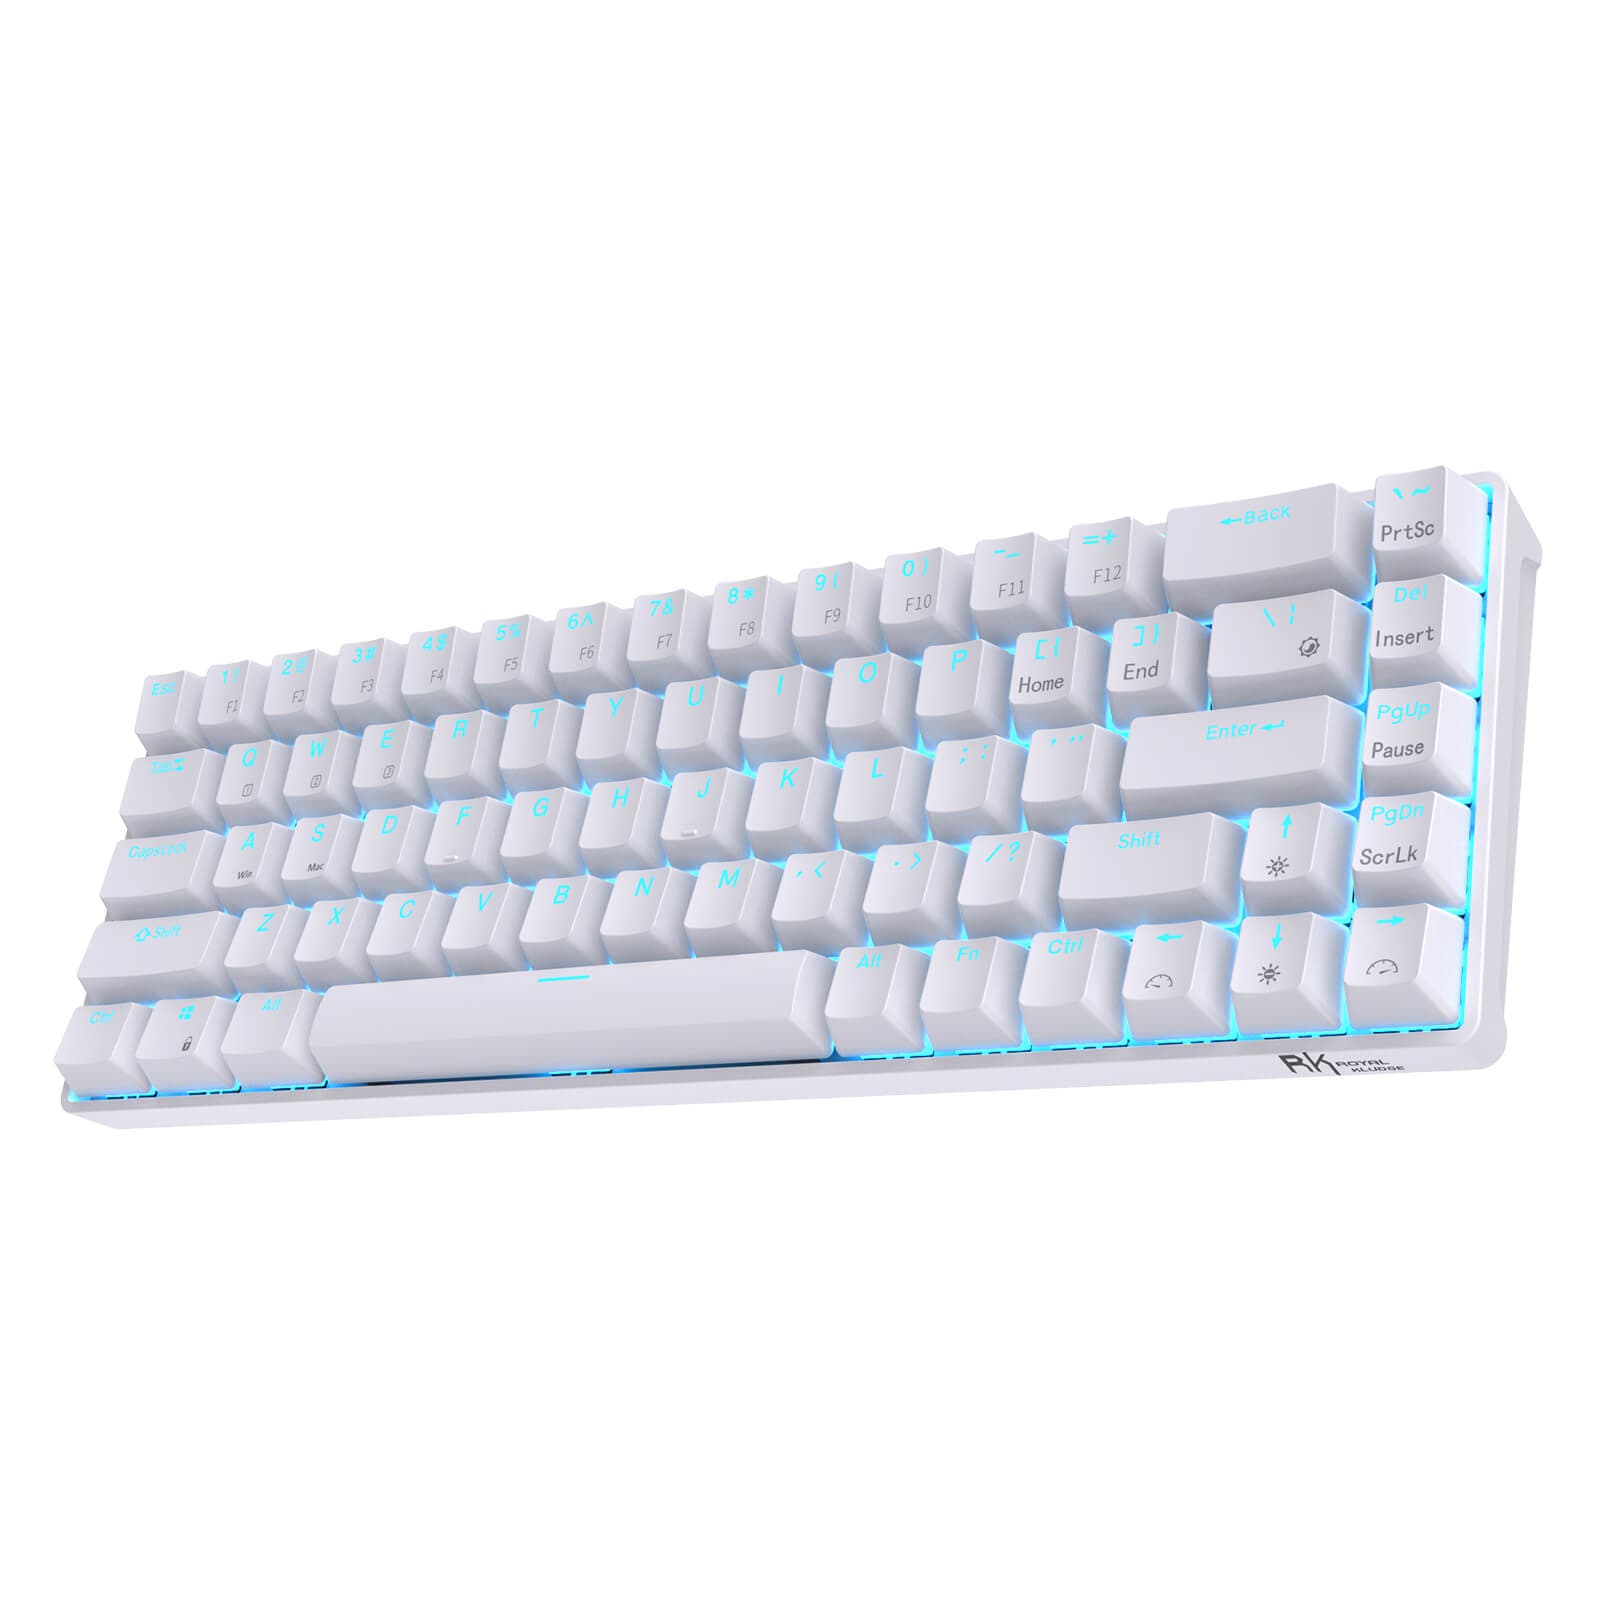 RK68 65% Wireless Mechanical Keyboard (Single Color Backlit)